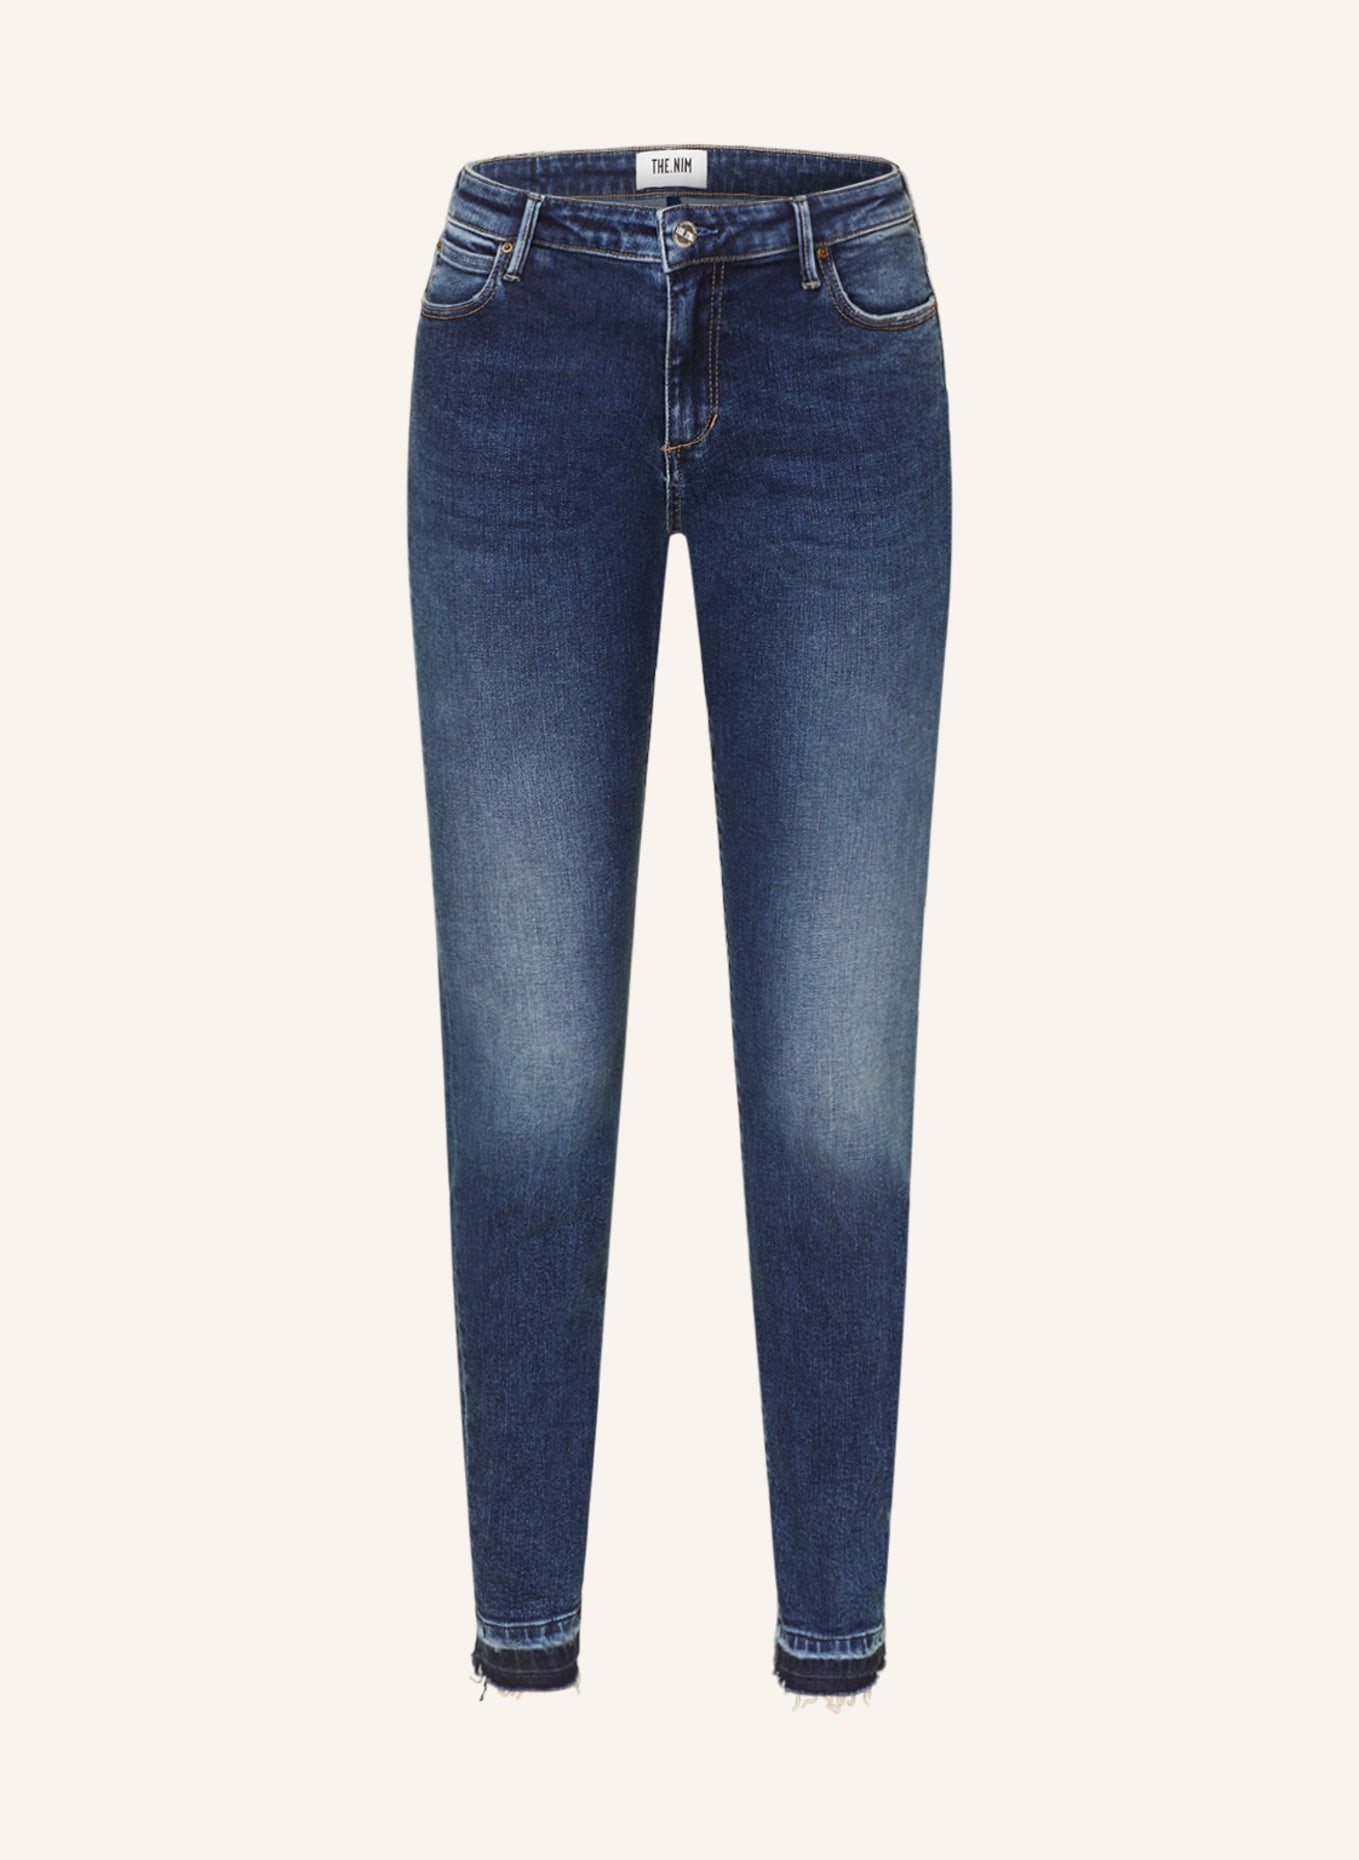 THE.NIM STANDARD Skinny Jeans HOLLY, Farbe: W790-DBL DARK WASHE BLUE (Bild 1)